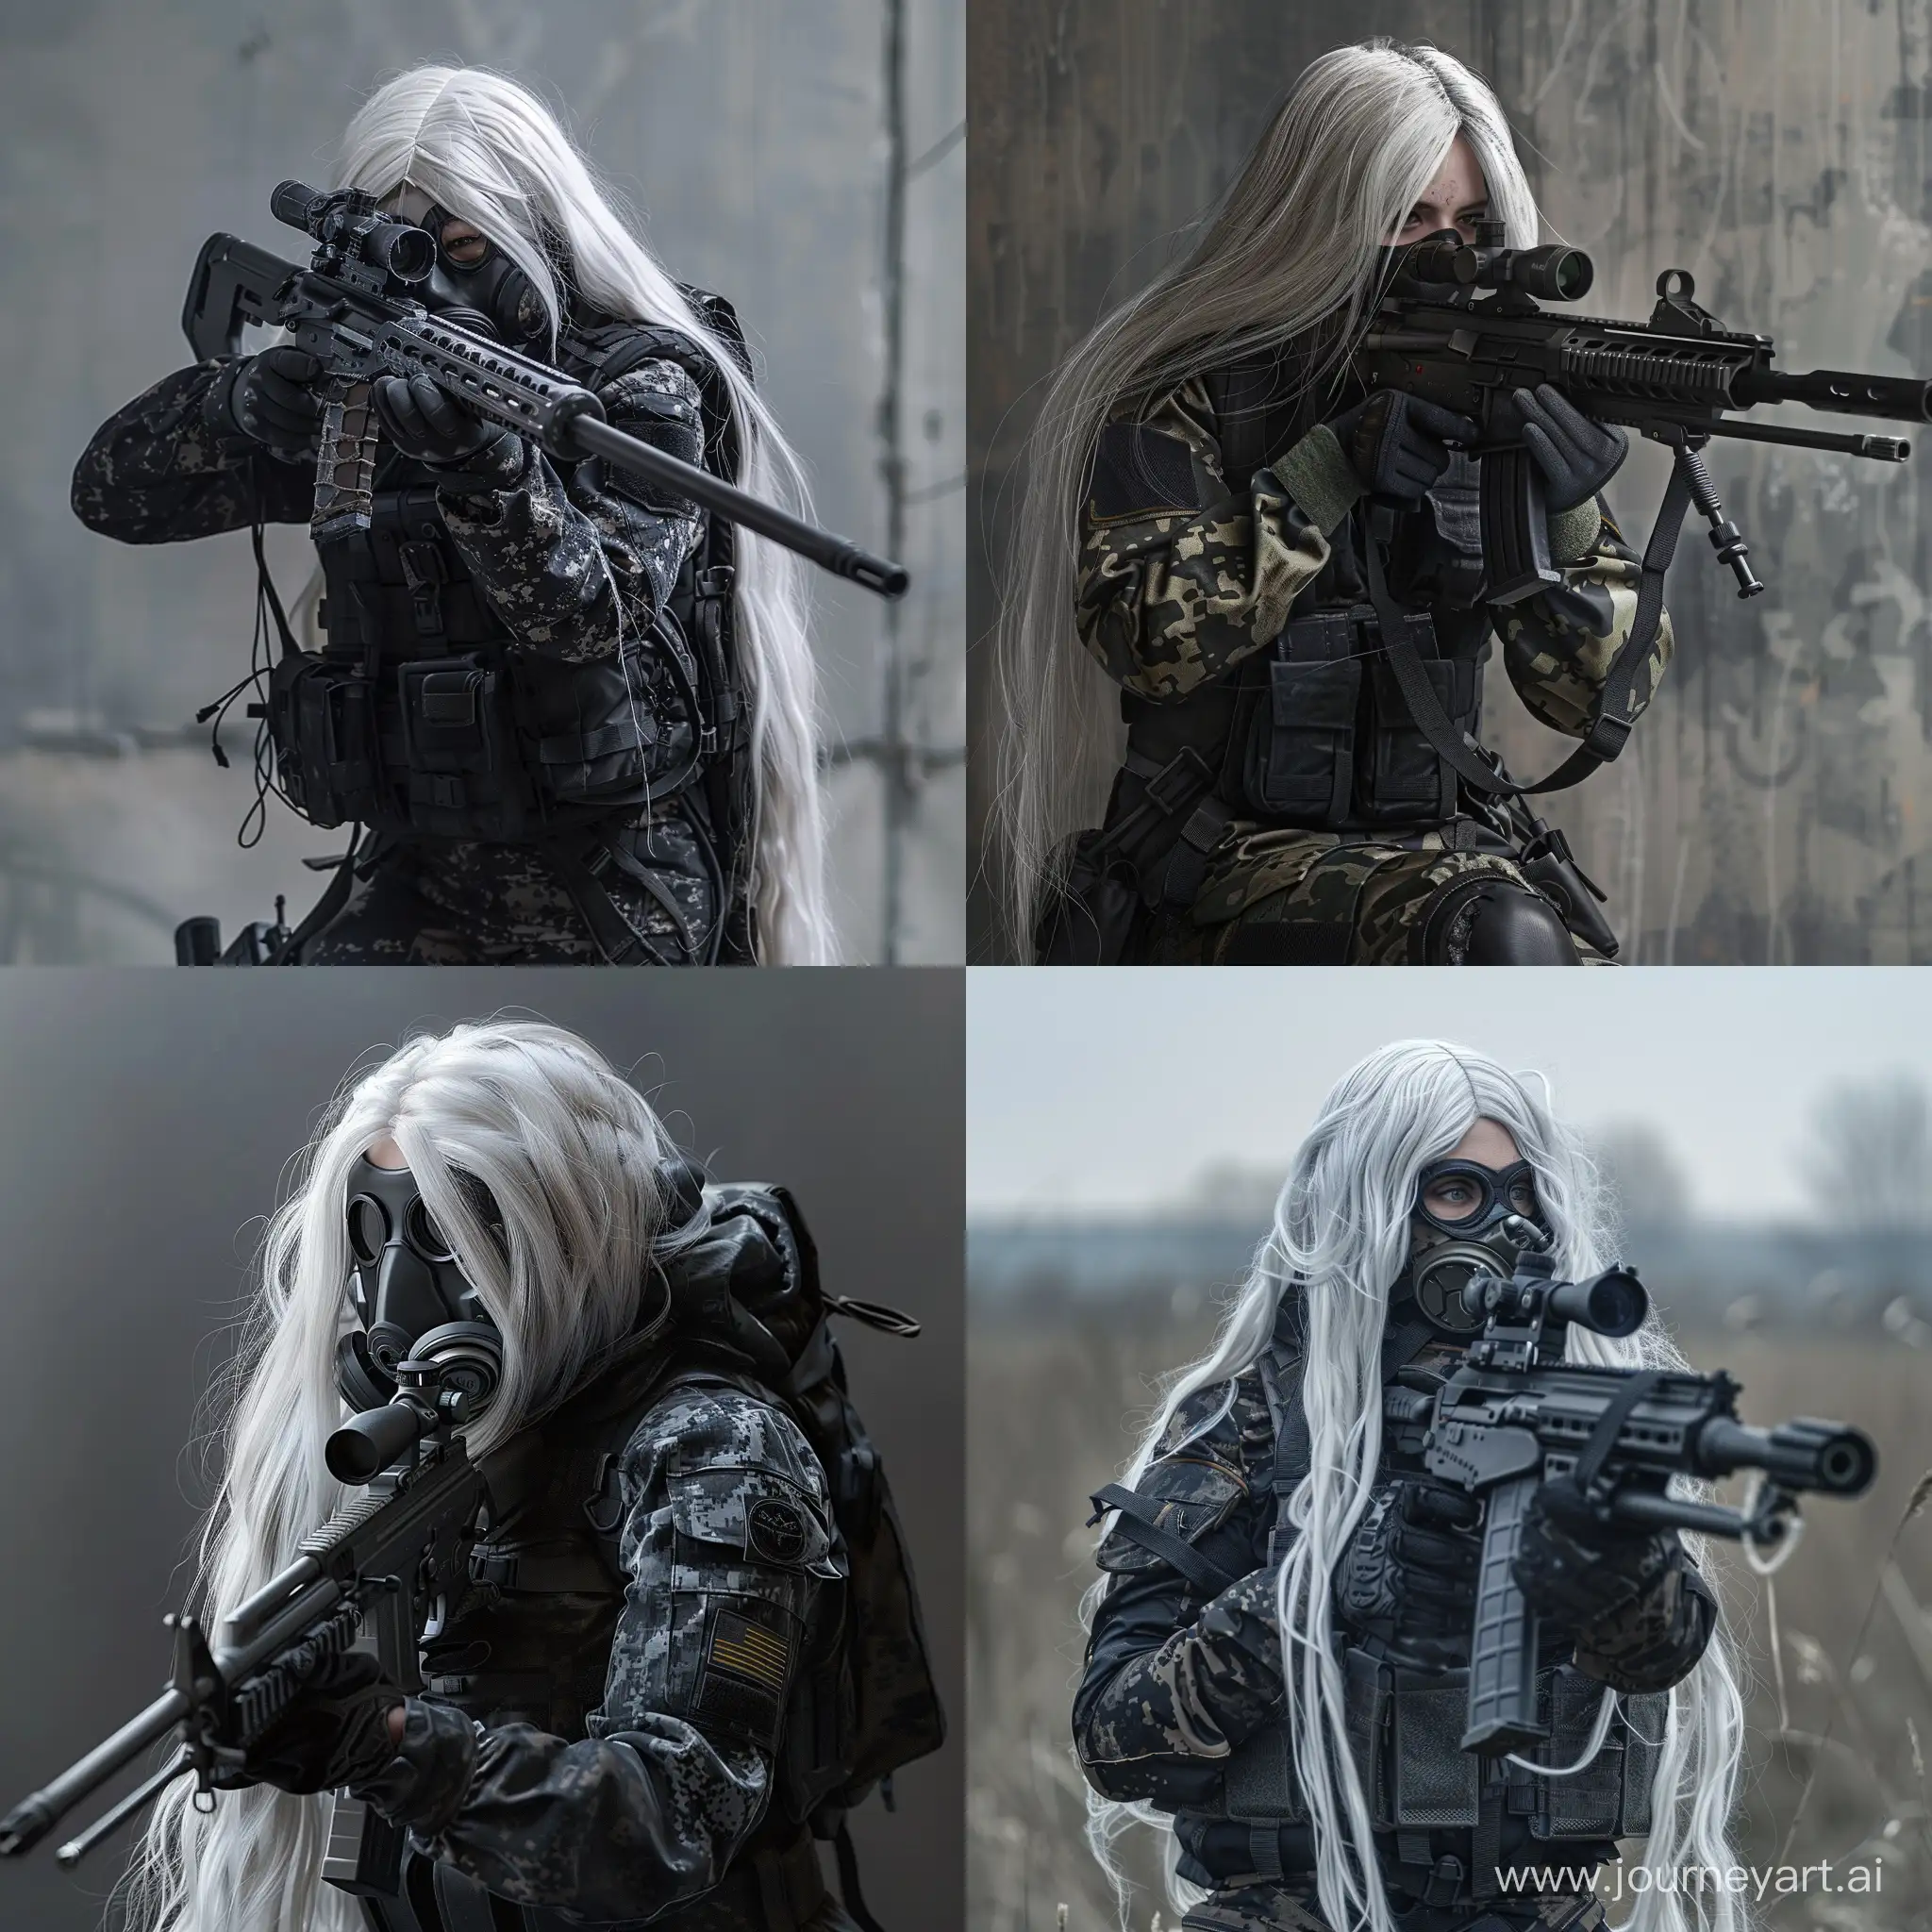  S.T.A.L.K.E.R. Duty, Long White Hair, Female, Sniper Rifle, Black Camouflage Gear, Respirator